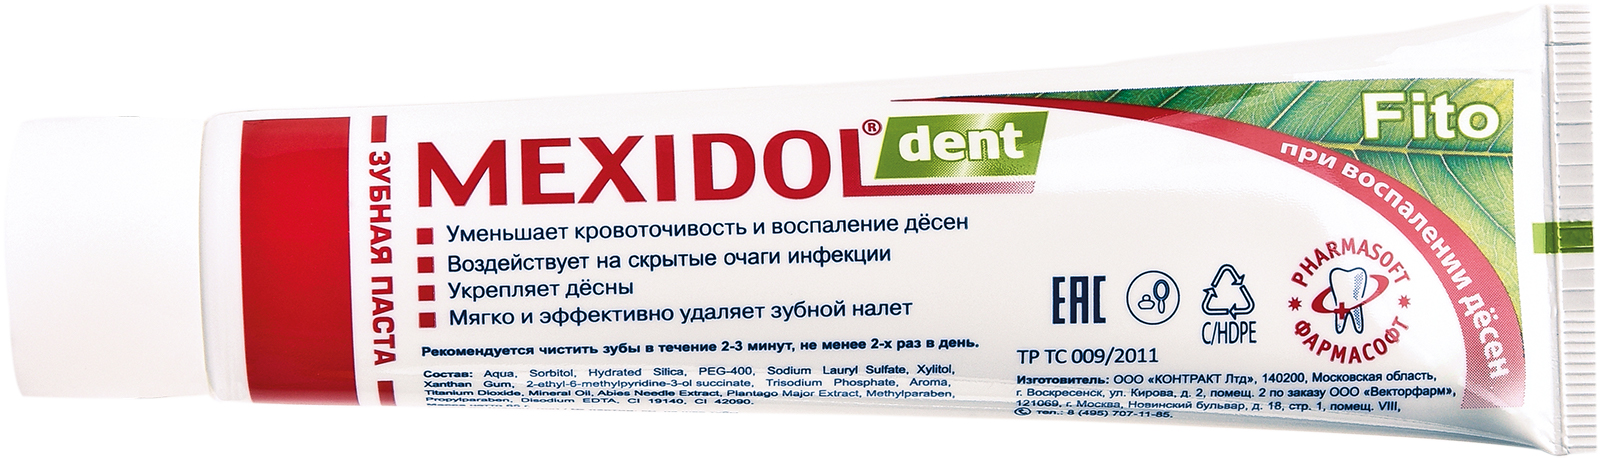 Мексидол Дент Фито, зубная паста, 100 г